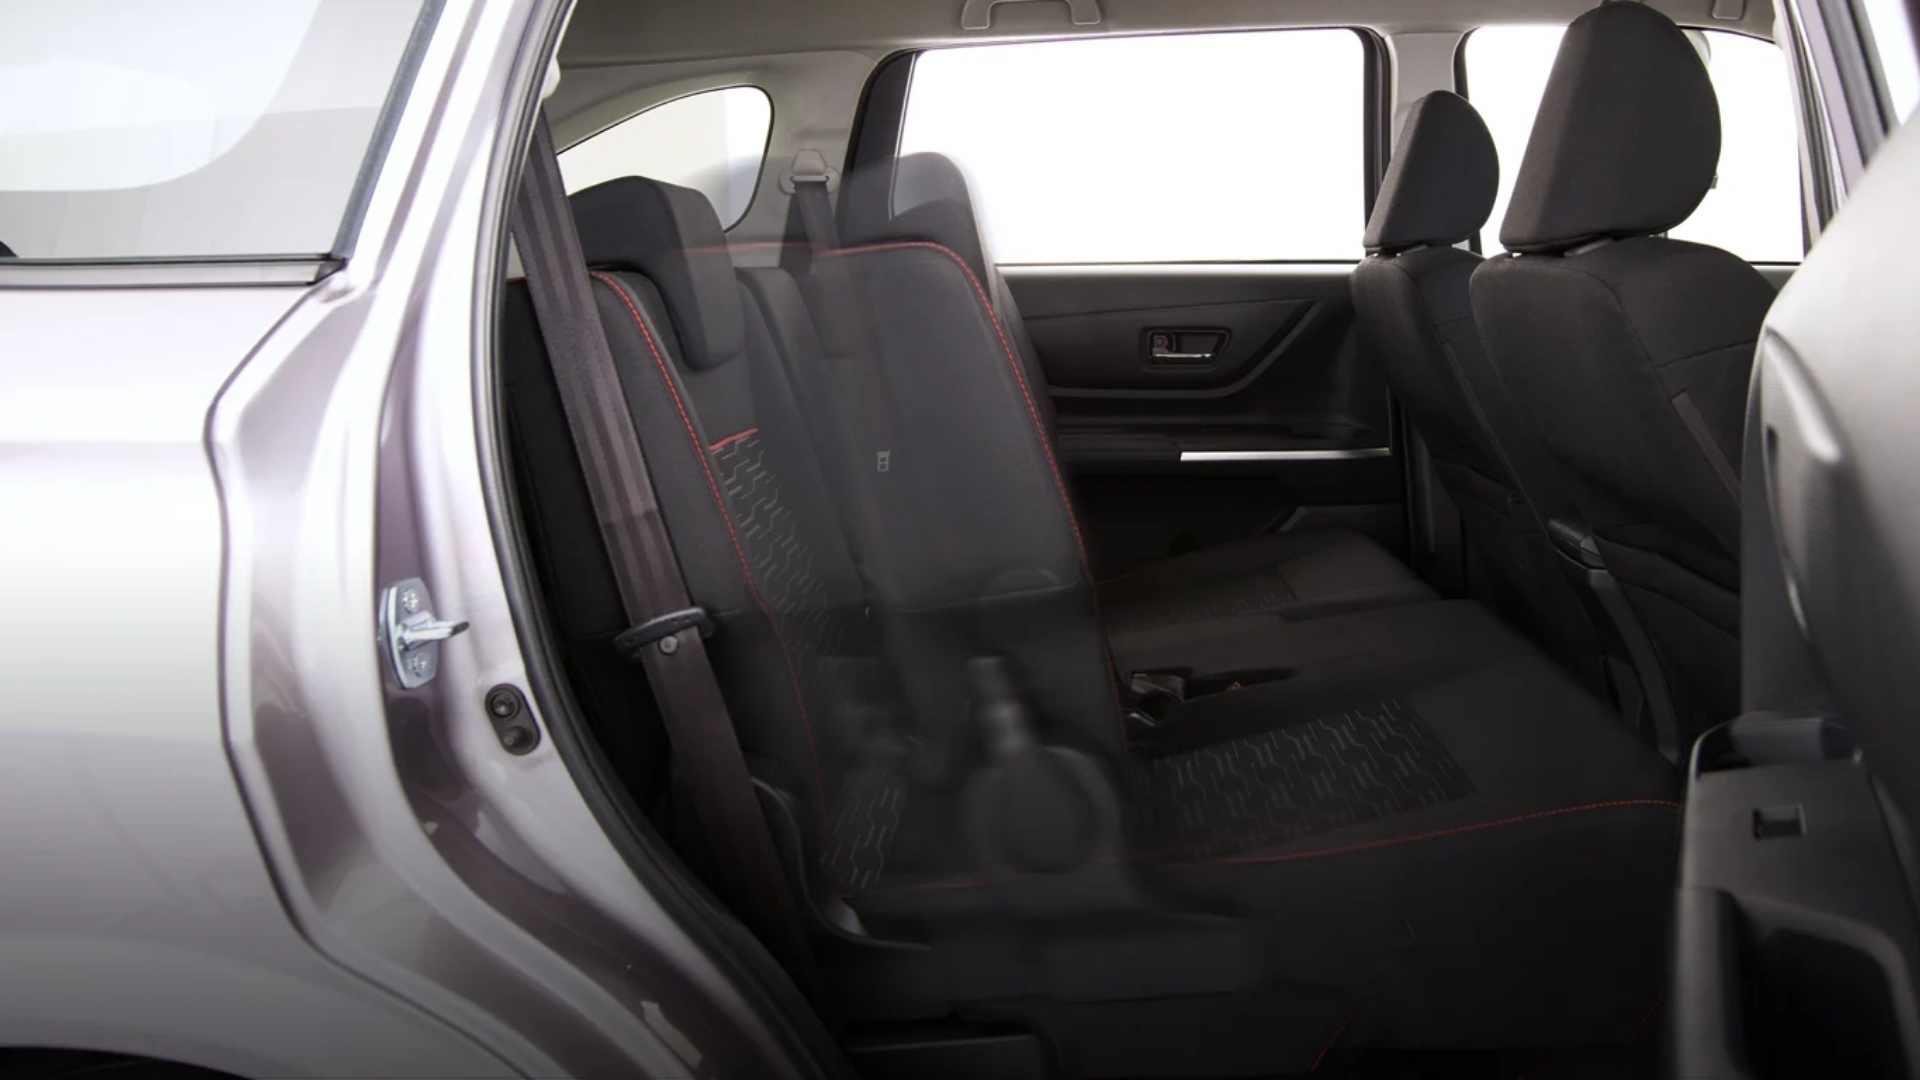 TRAC - MVP Car - Daihatsu Xenia Interior 02.jpg